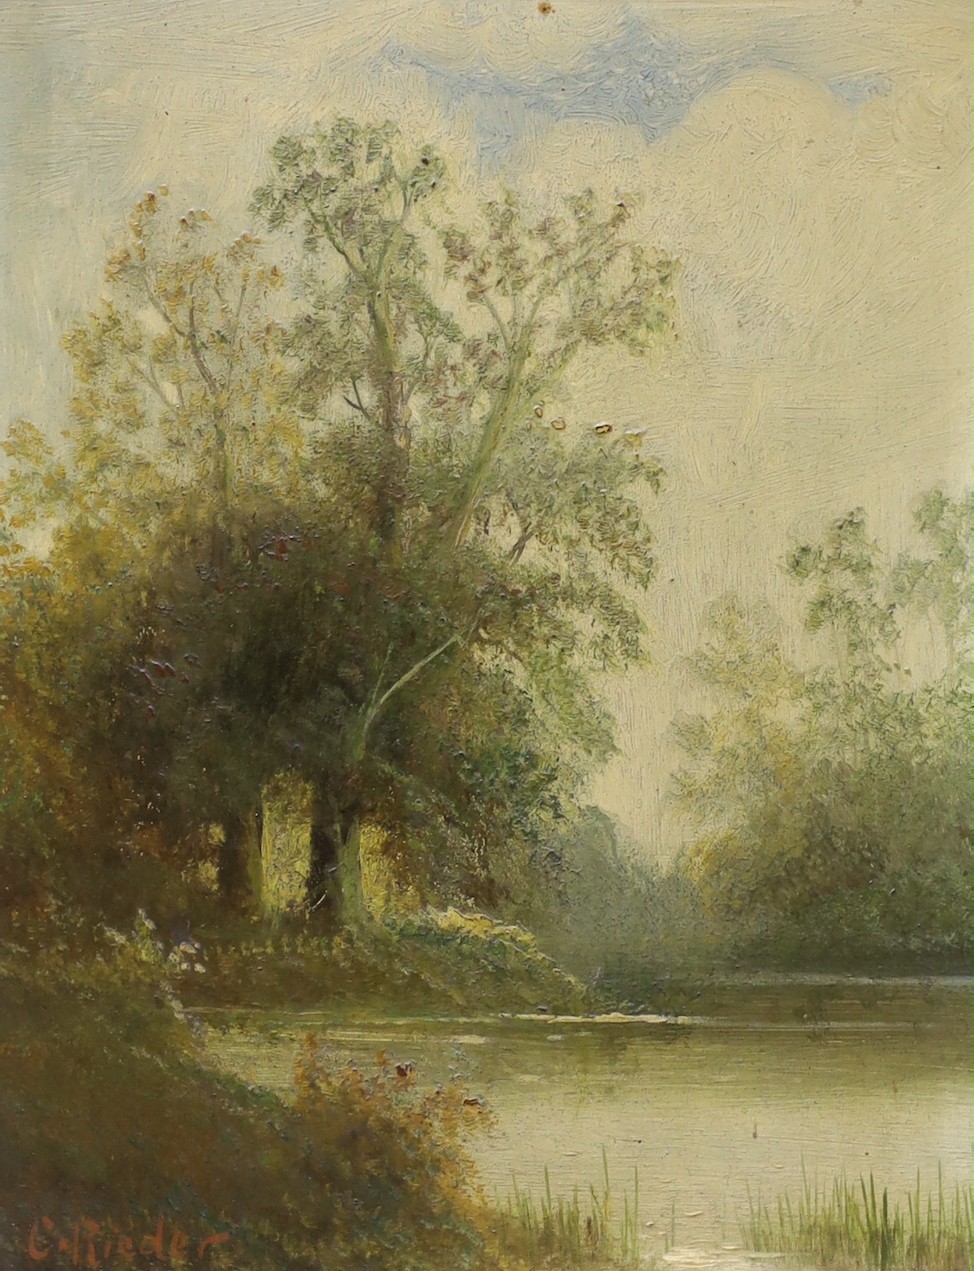 C. Rieder (c.1900), pair of oils on panel, River landscapes, signed, 25 x 20cm - Image 2 of 3